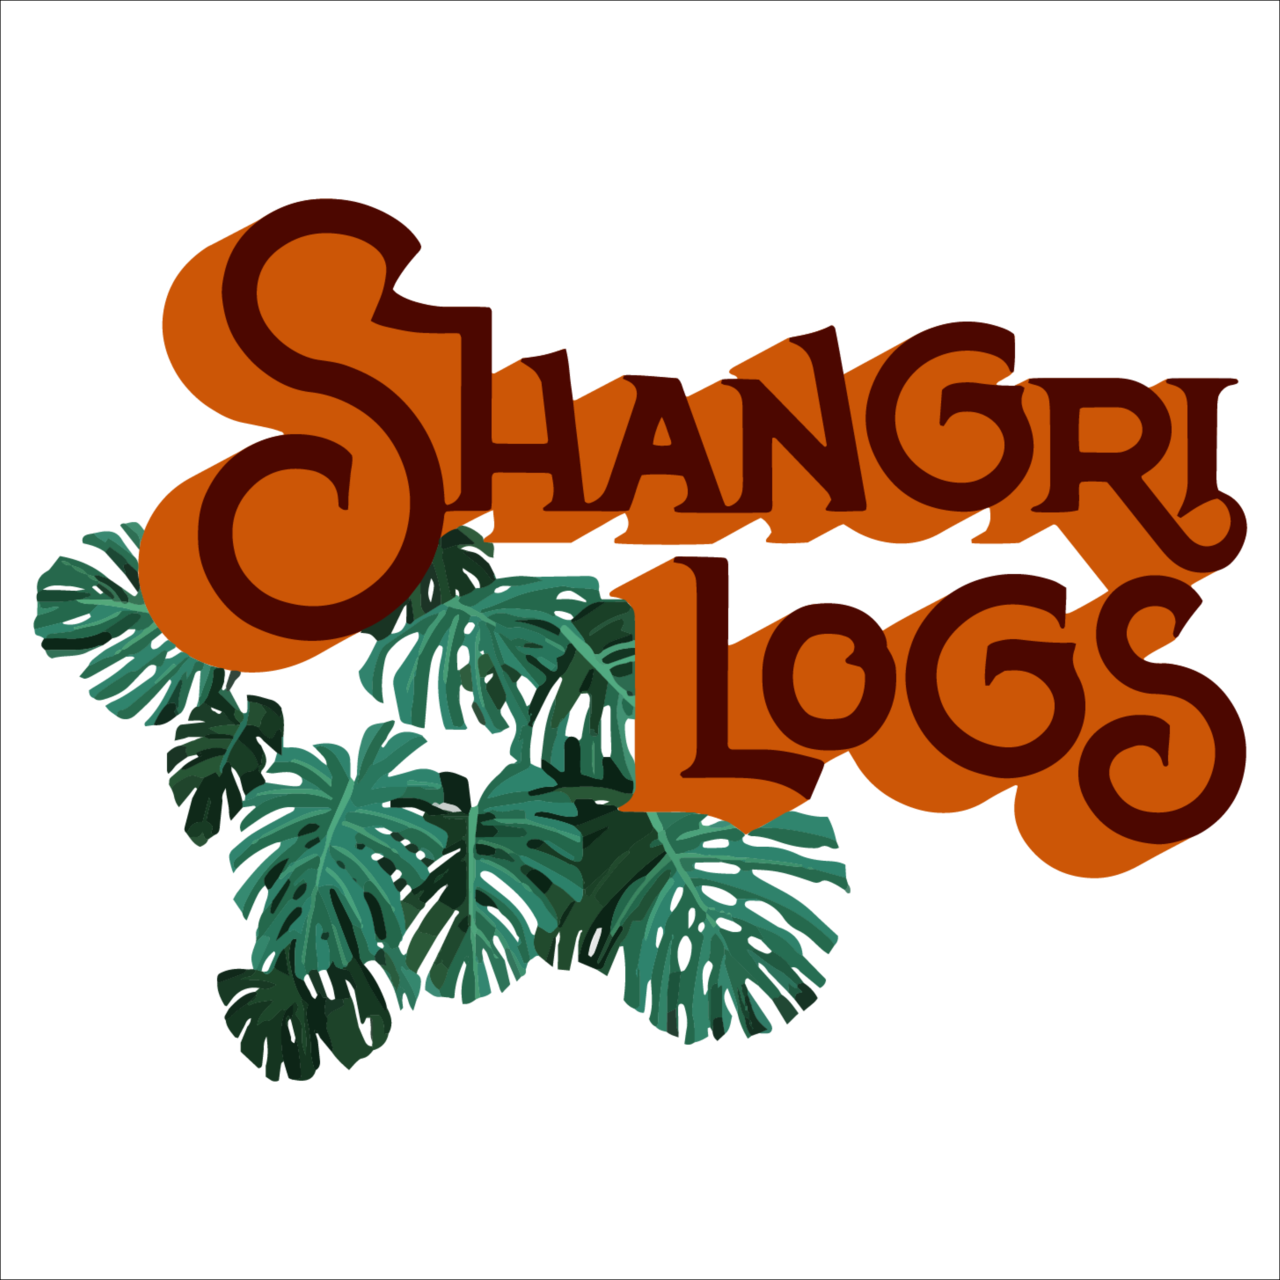 Artwork for Shangrilogs